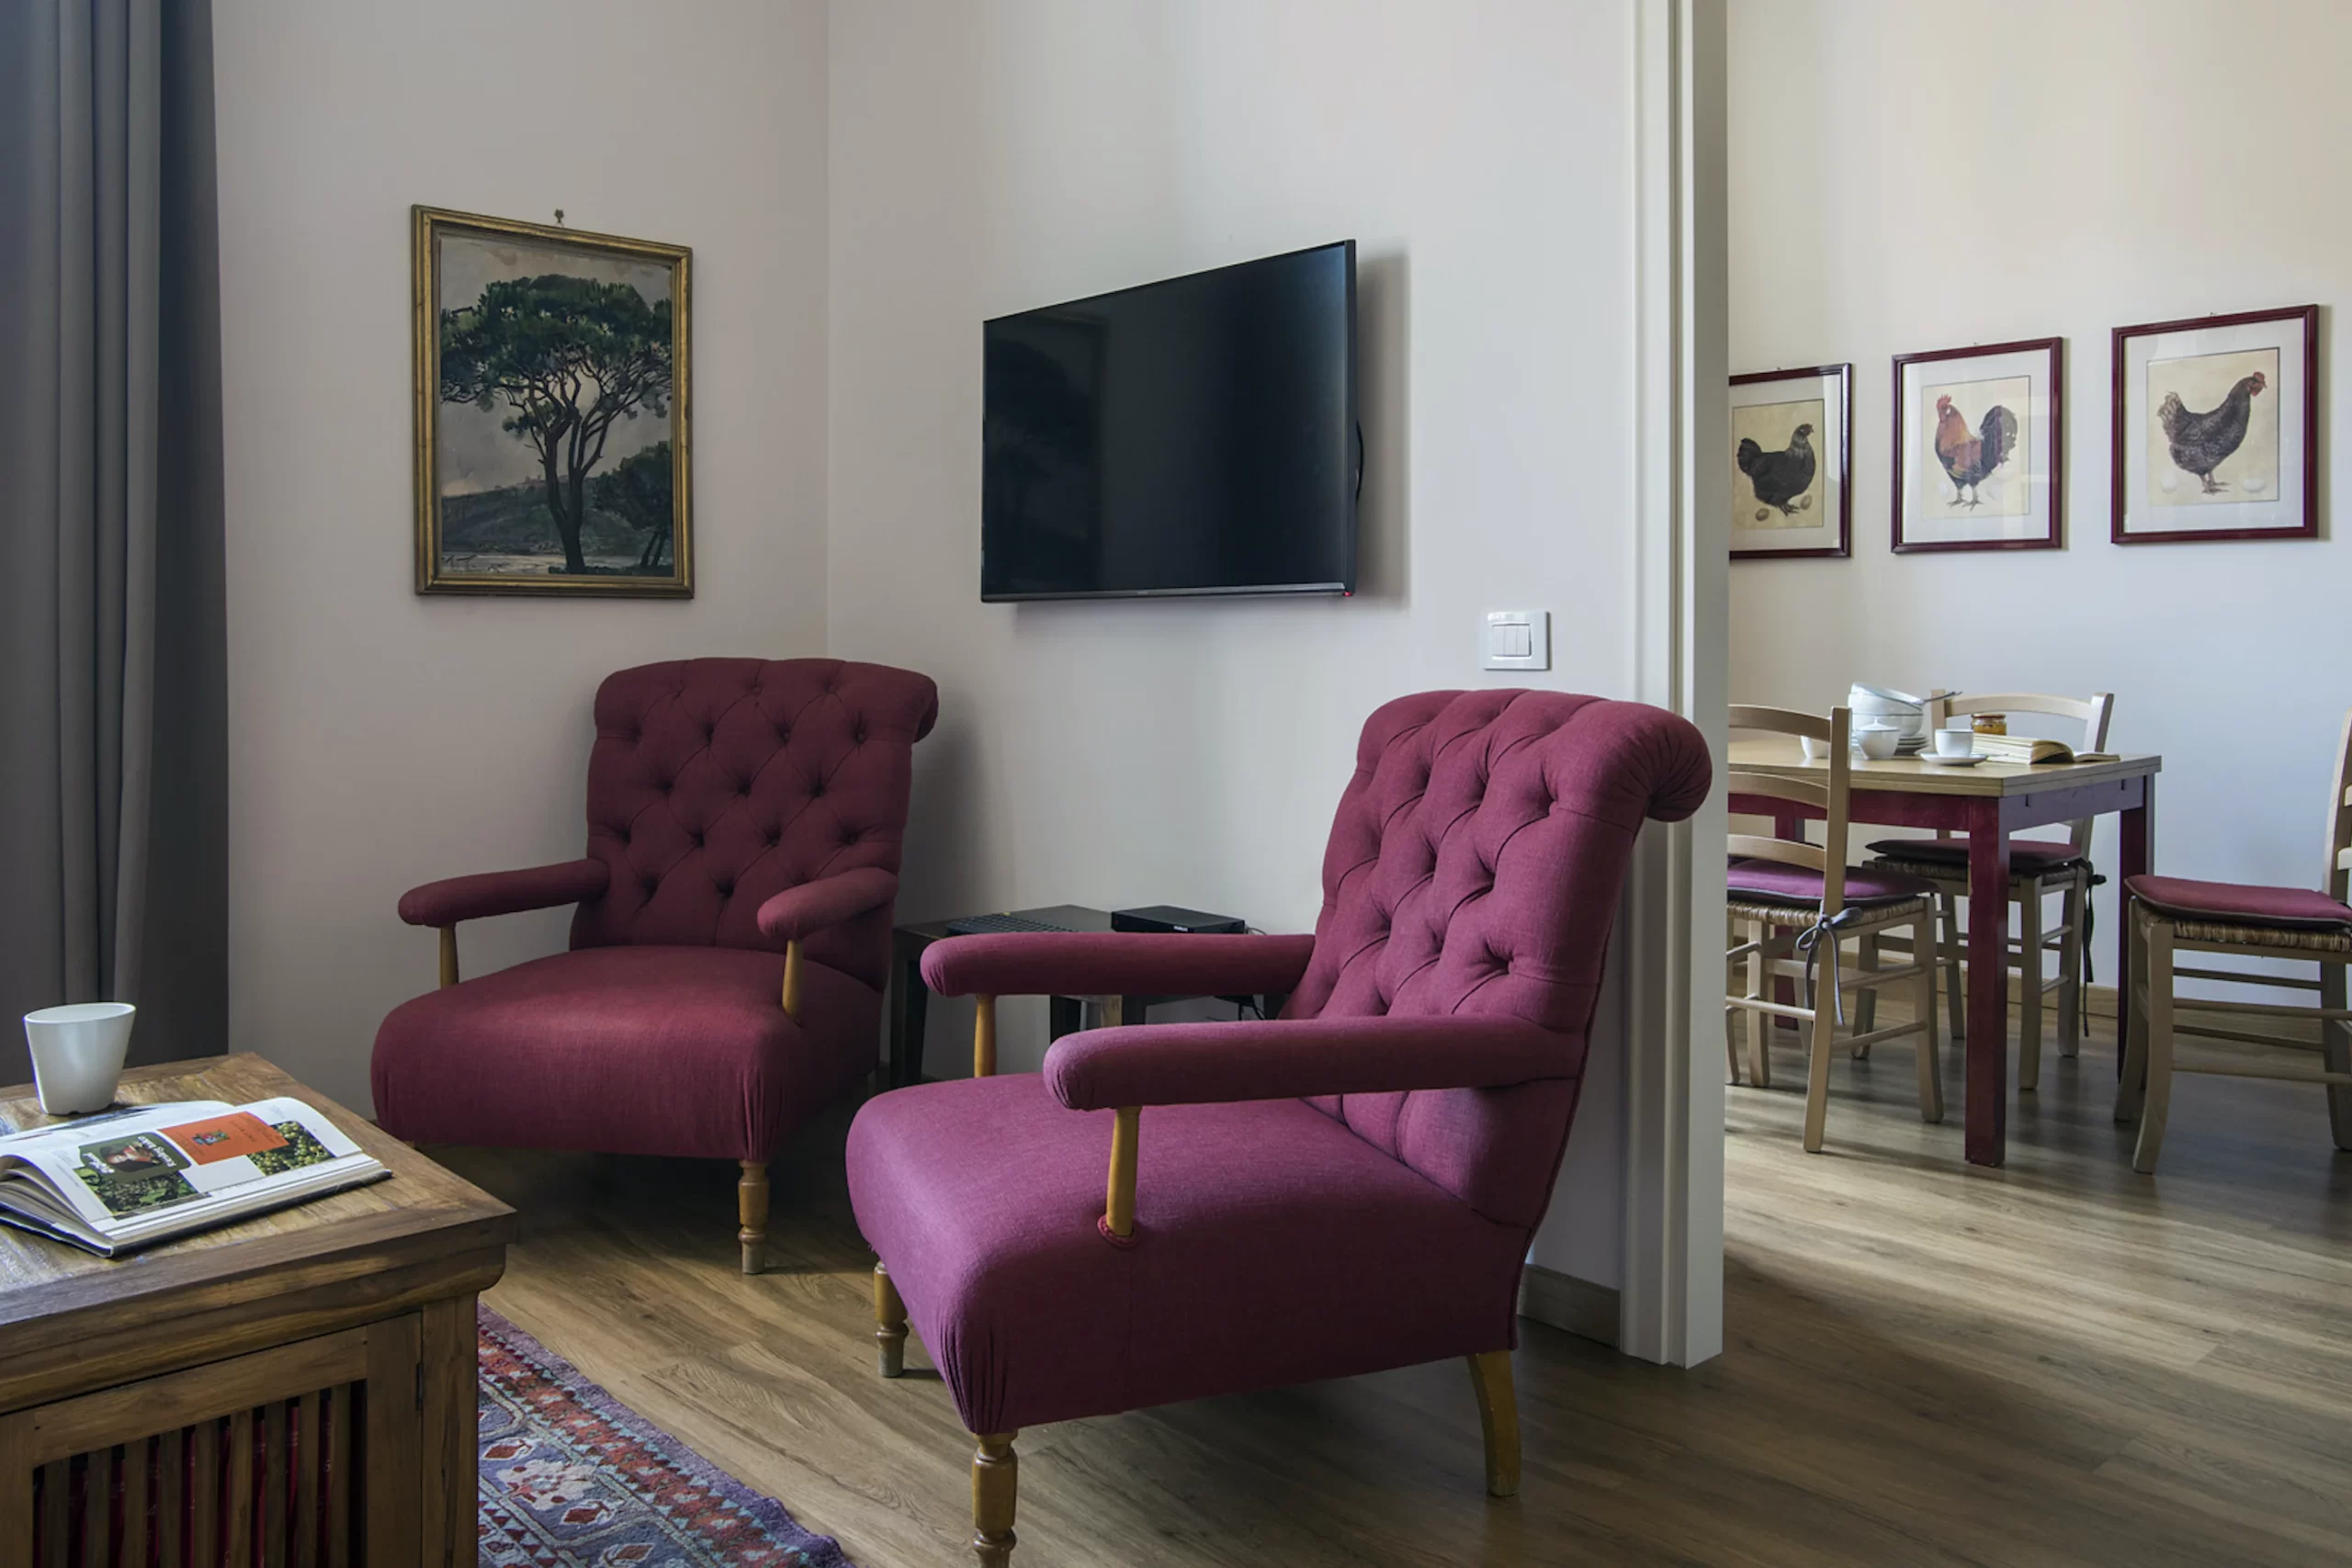 Best Hotels Near The Vatican City in Rome - Curiosità - Sitting Room